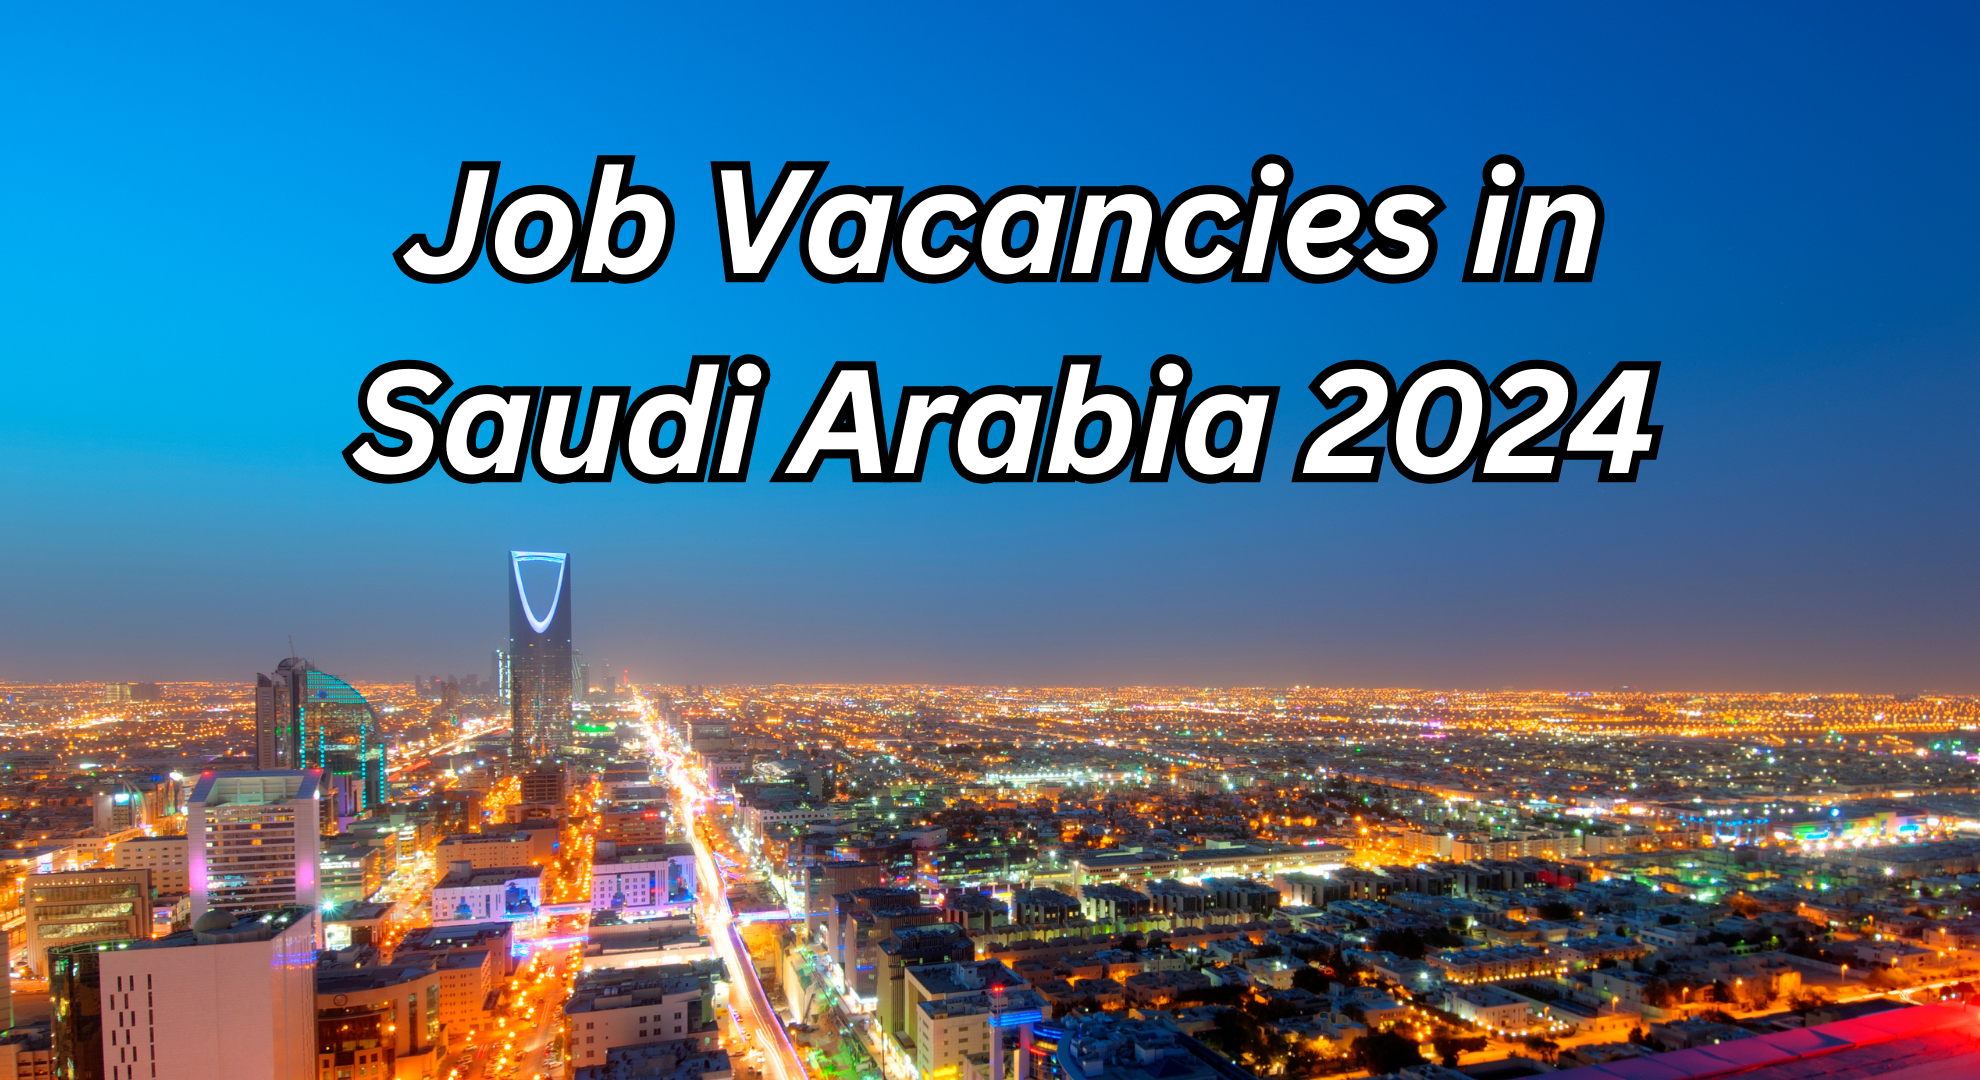 Job Vacancies in Saudi Arabia 2024